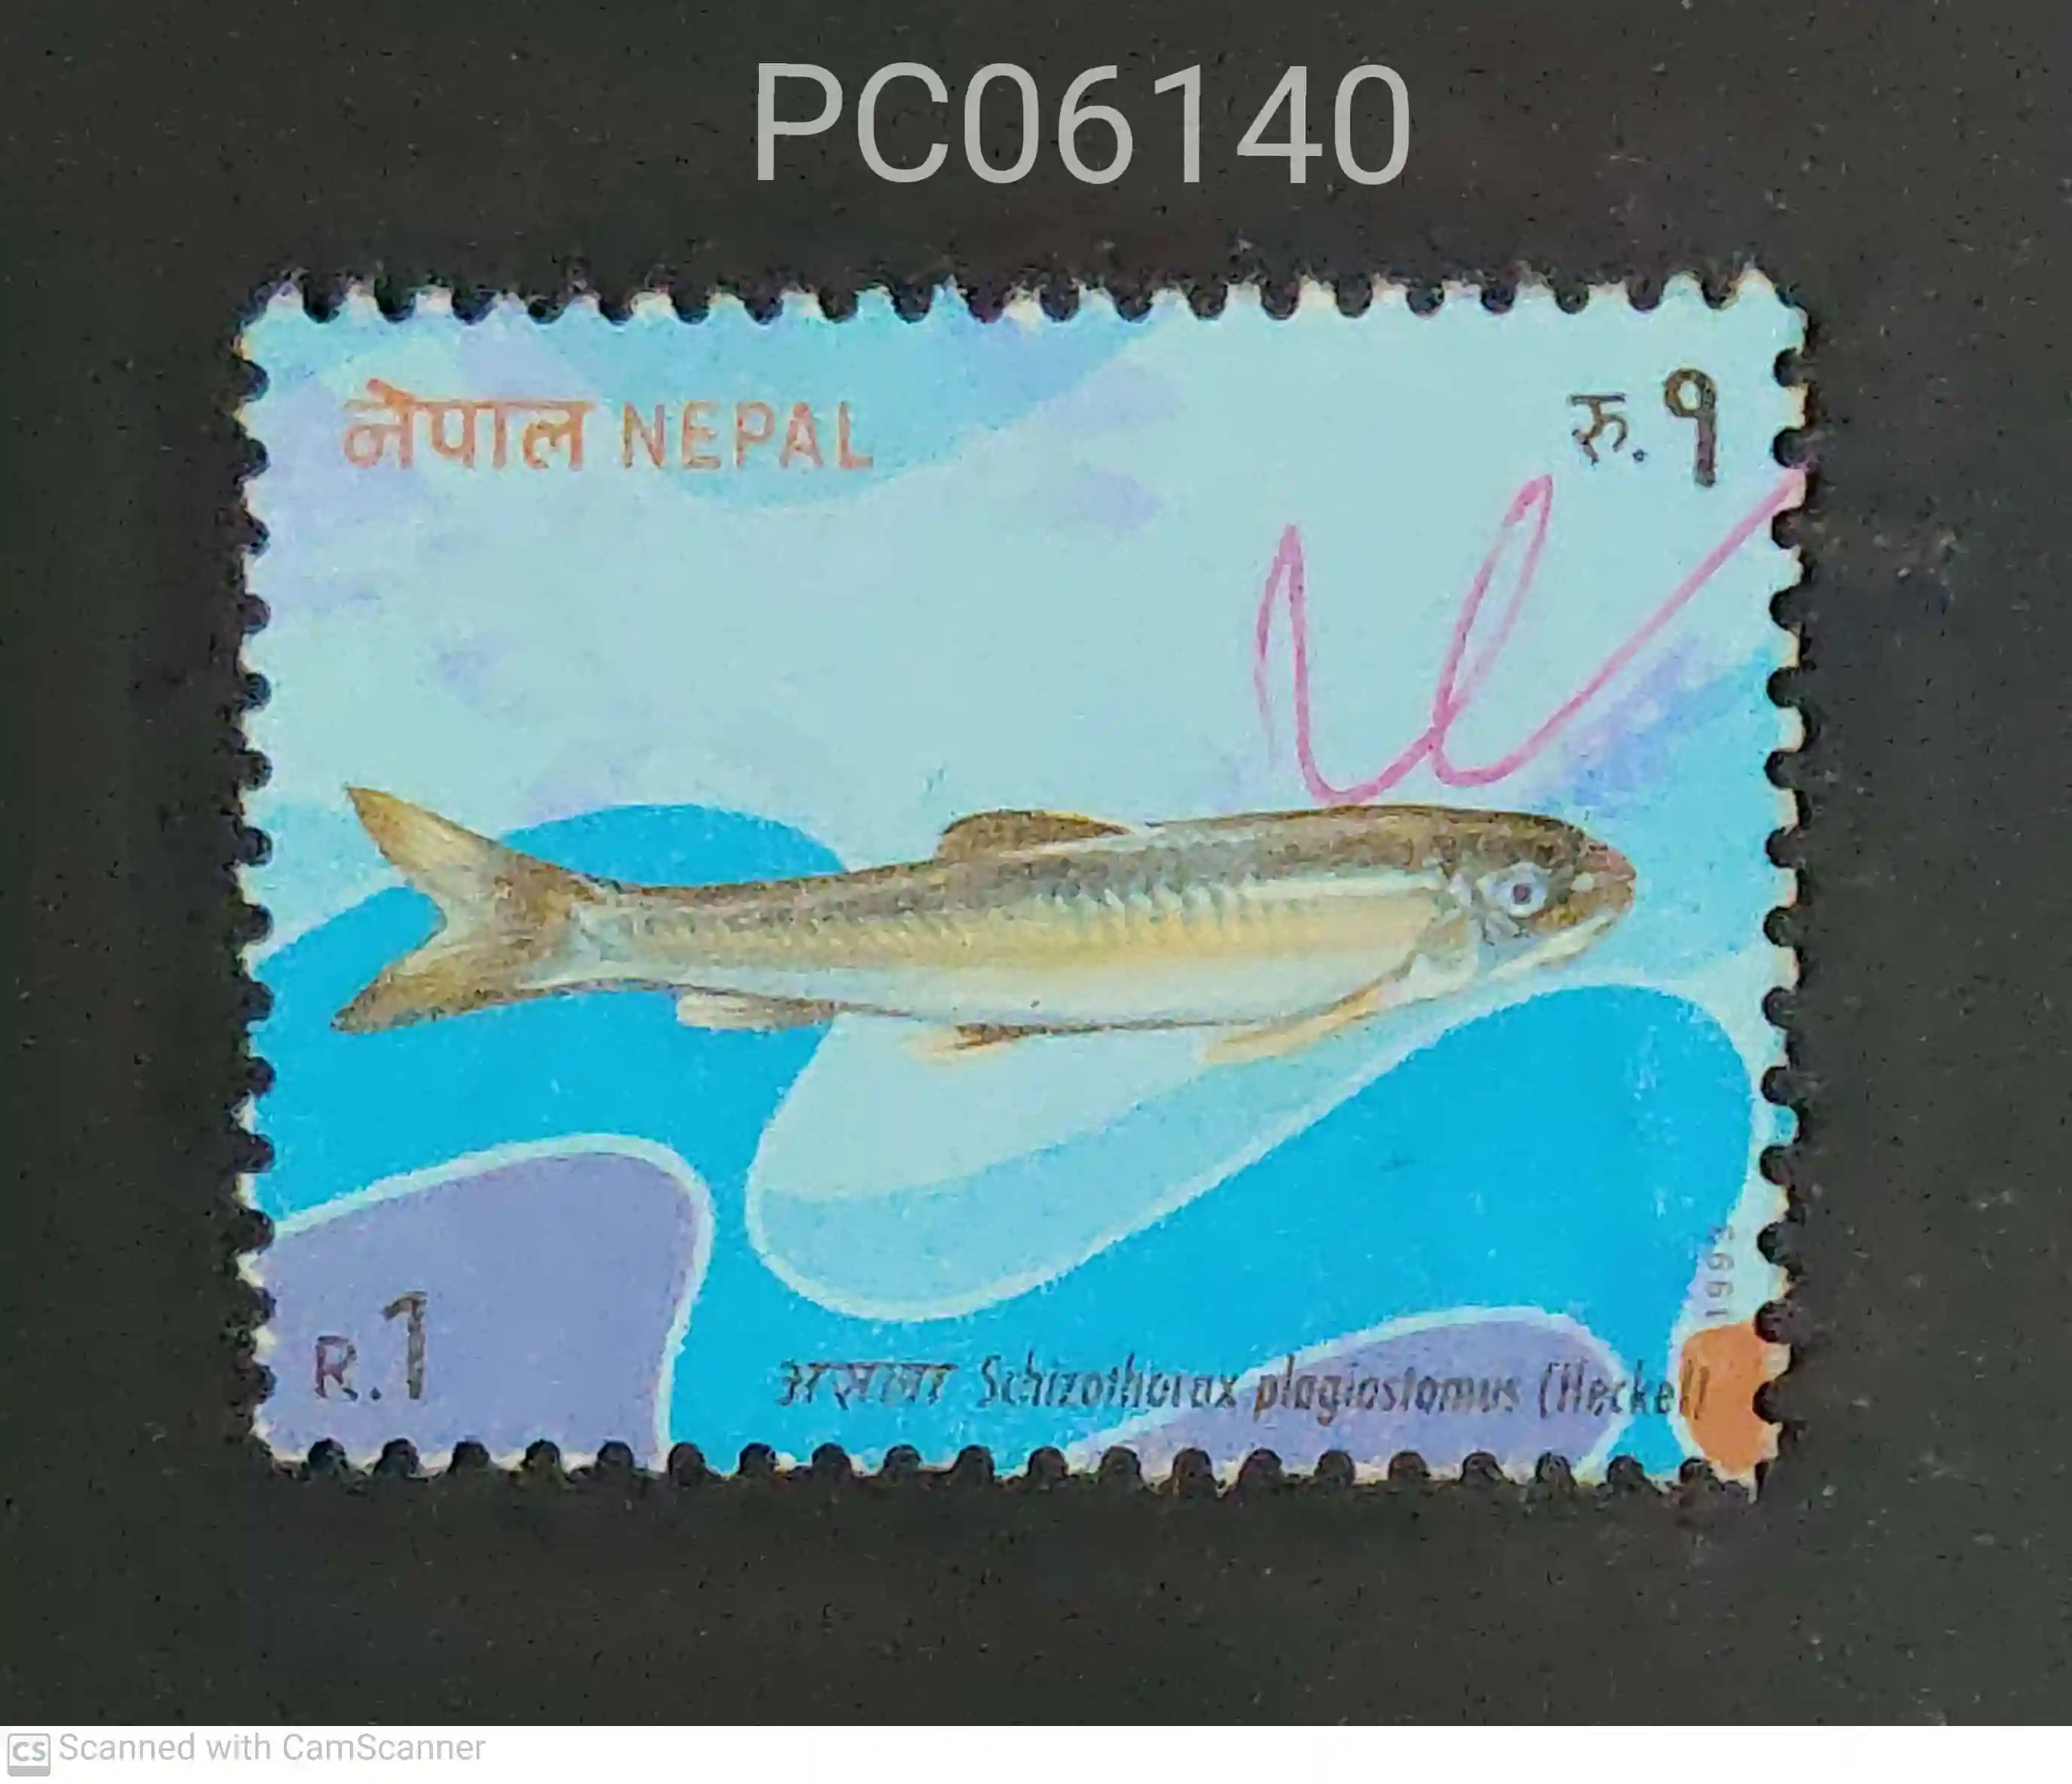 Nepal Cyprinid Fish (Schizothorax plagiostomus) Fish Used PC06140